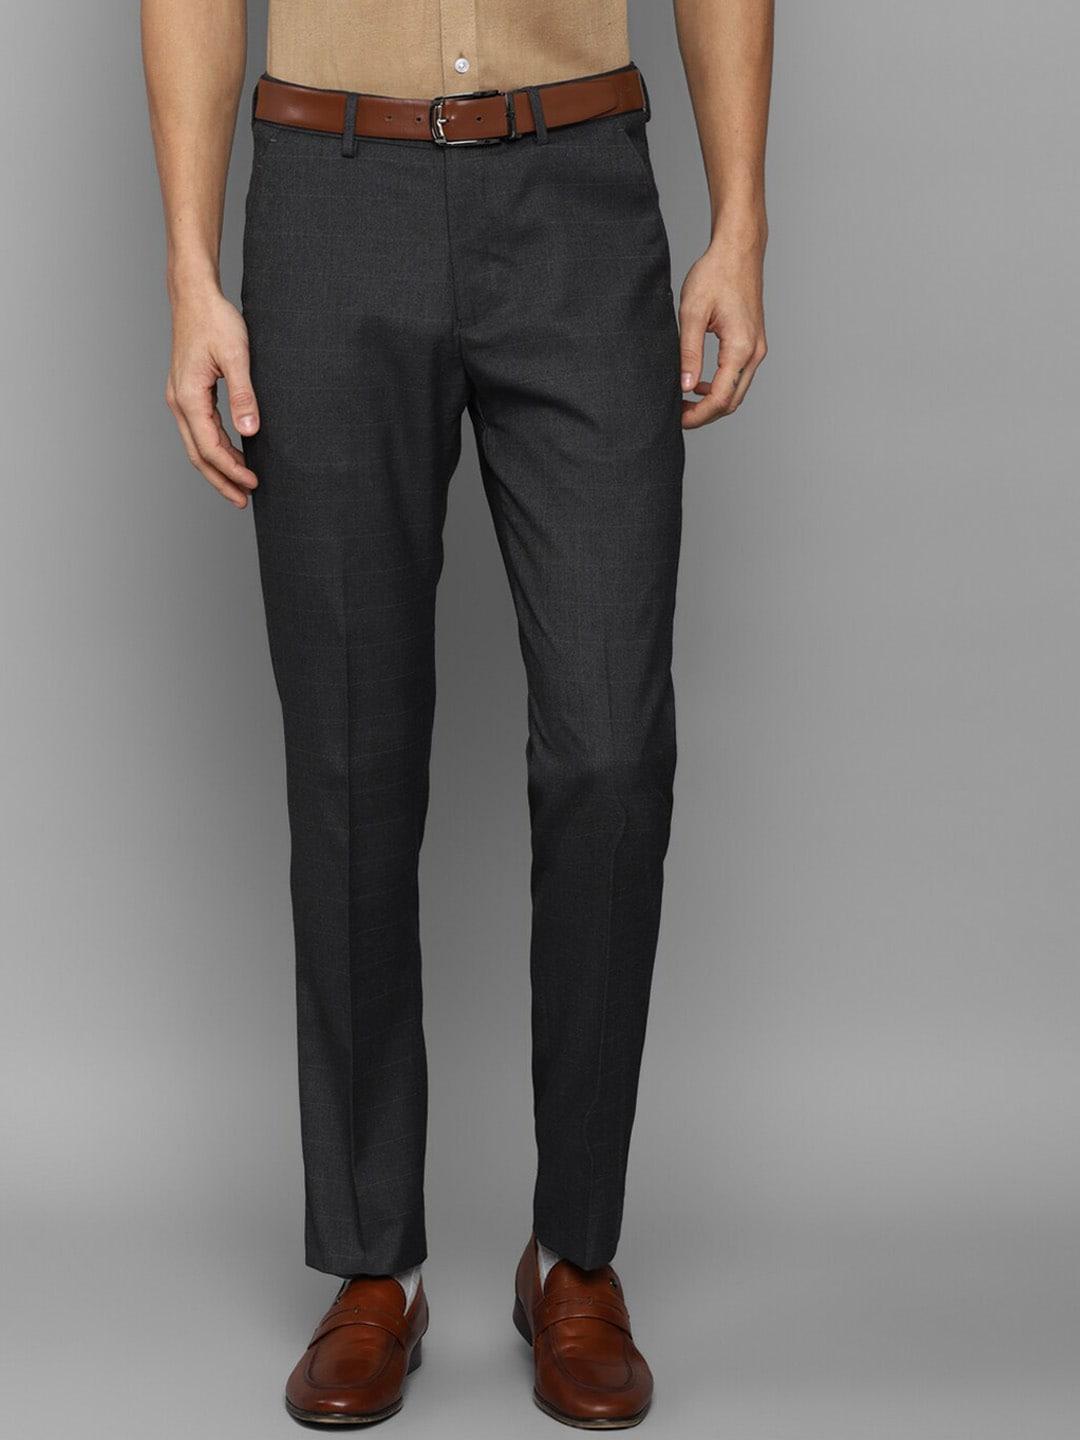 louis philippe men grey textured slim fit trousers